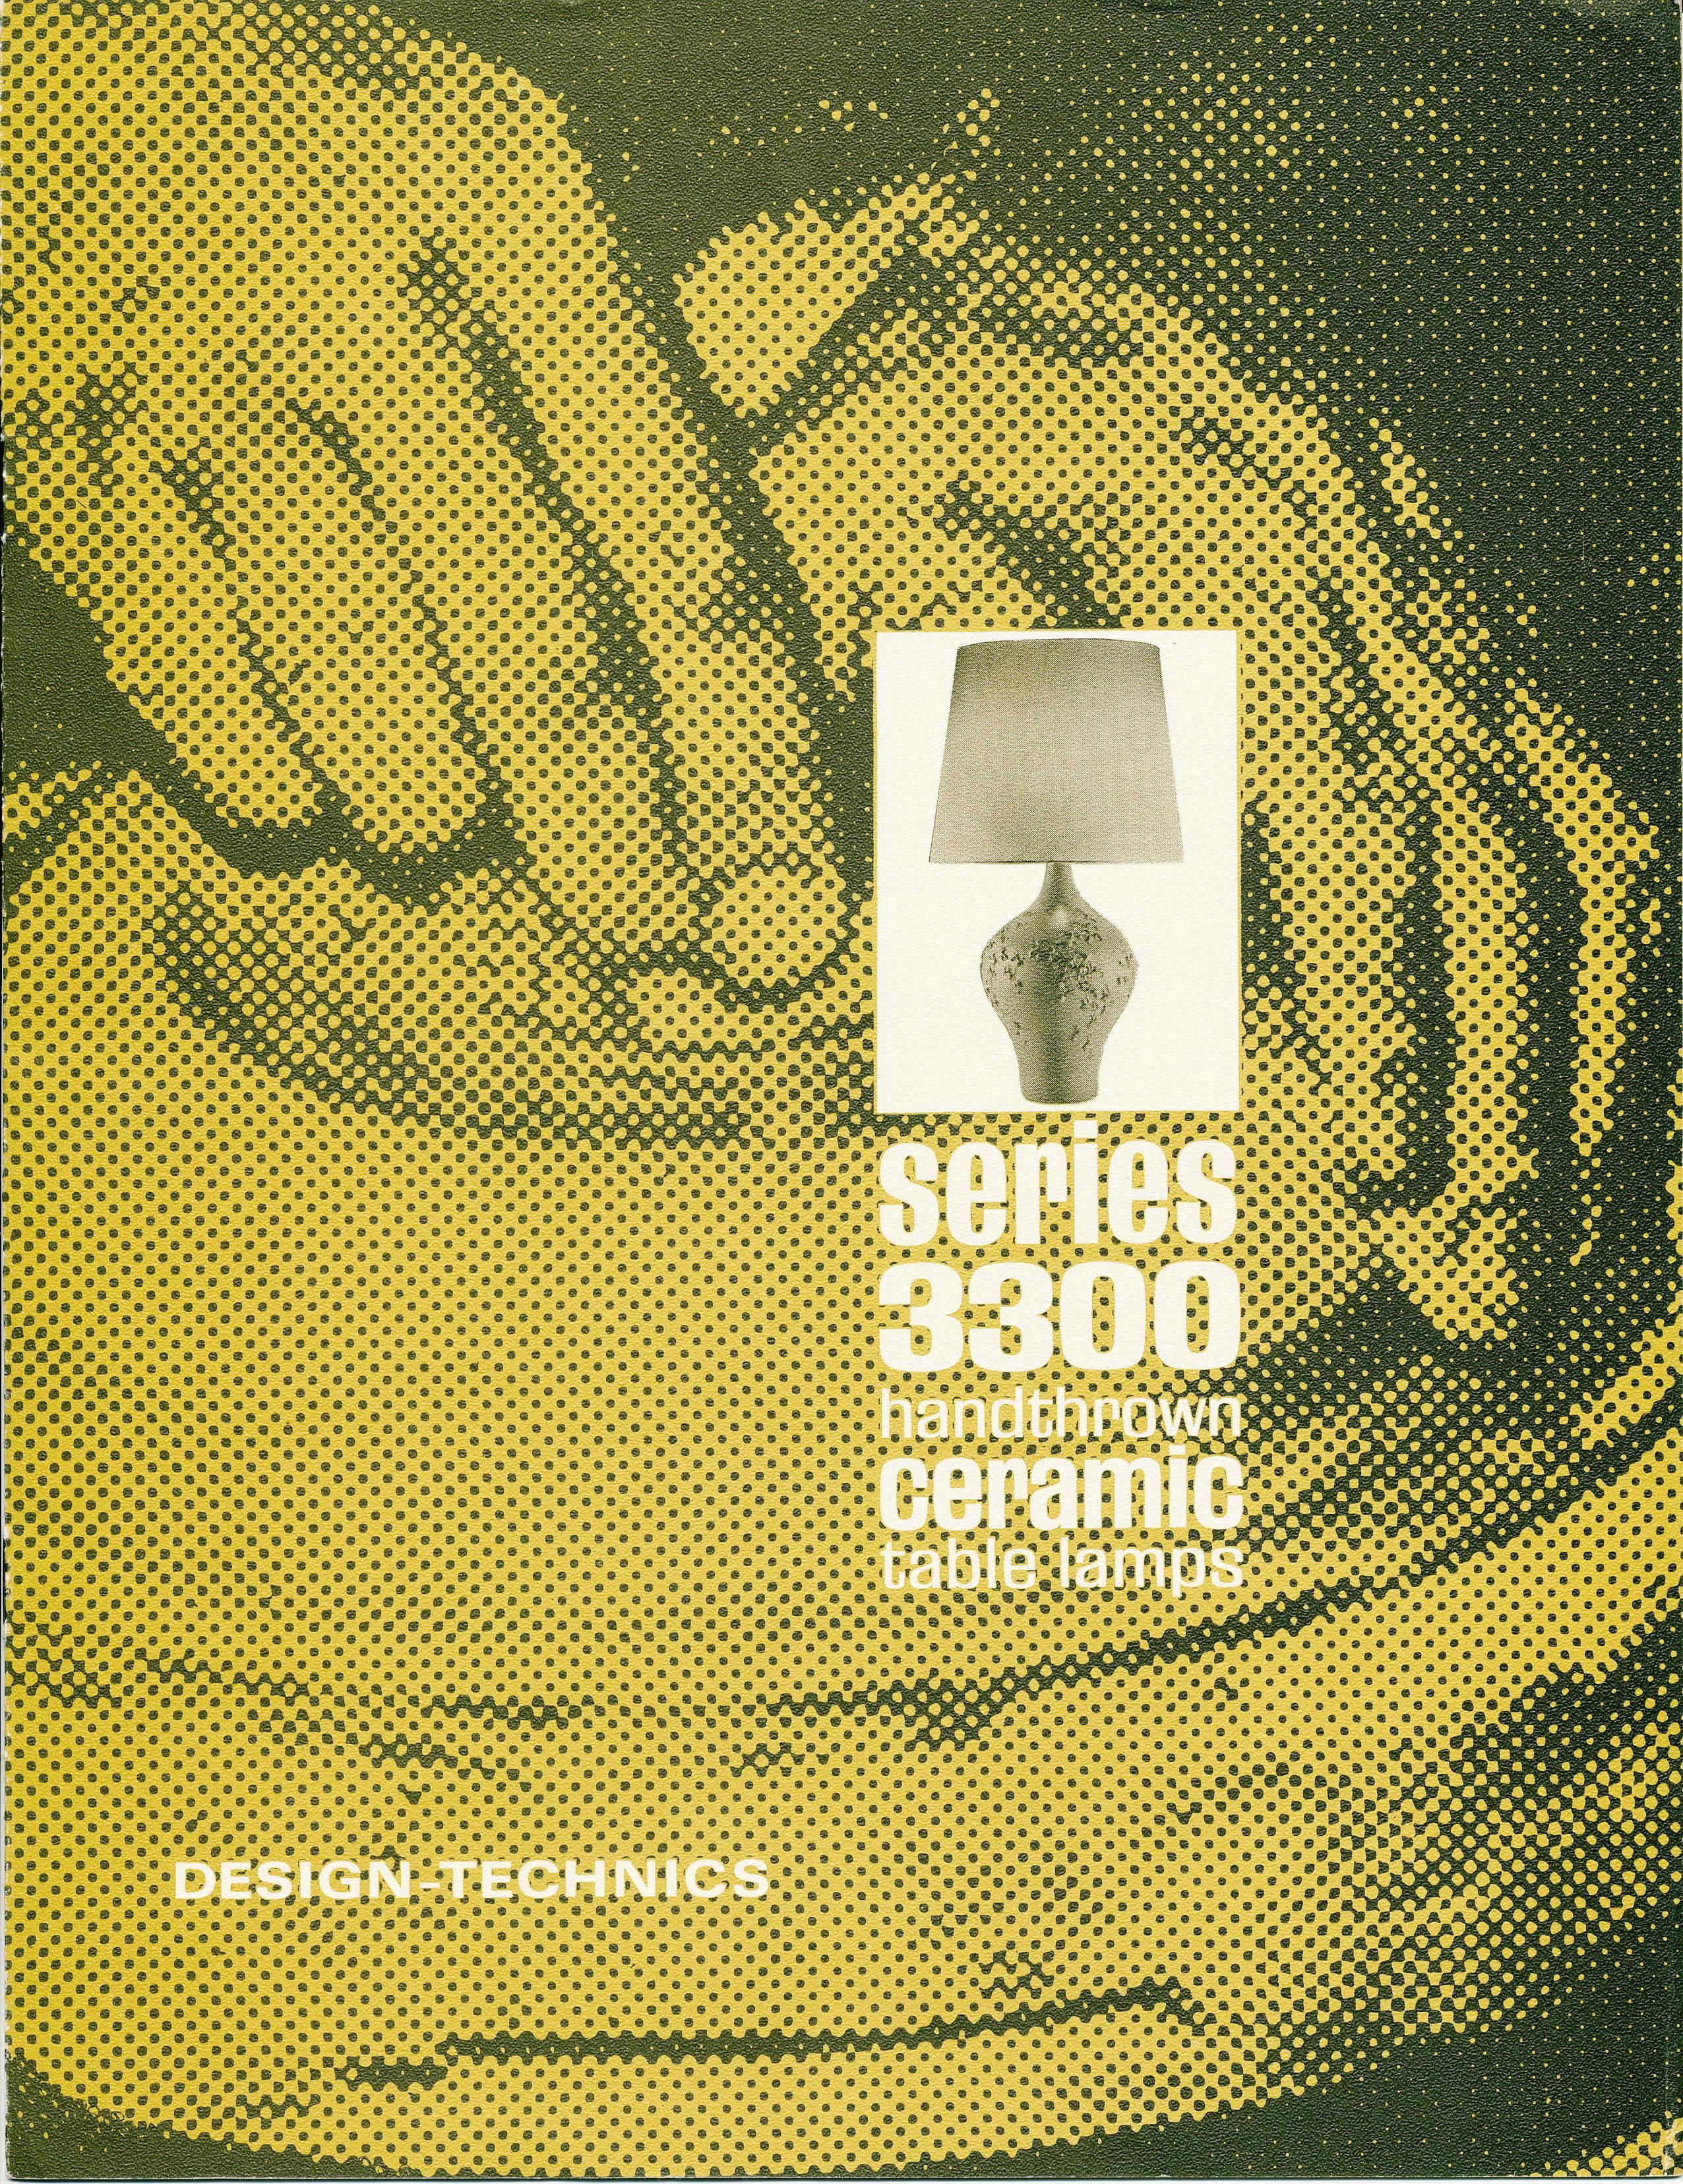 Lee Rosen Series 3300 Lamp by Design Technics 1